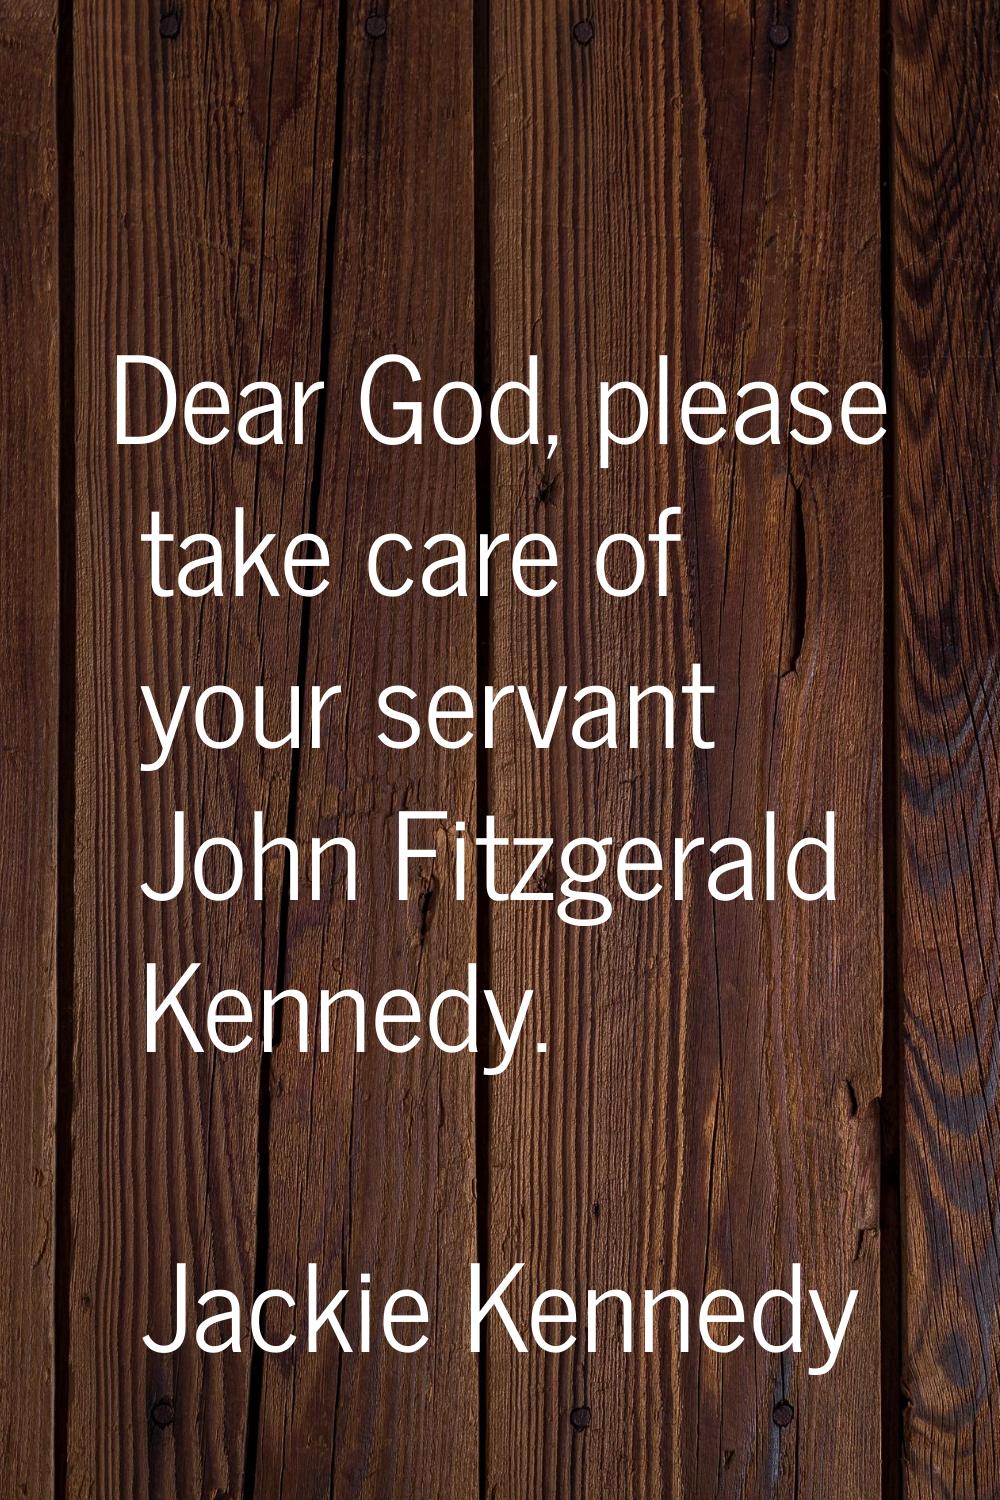 Dear God, please take care of your servant John Fitzgerald Kennedy.